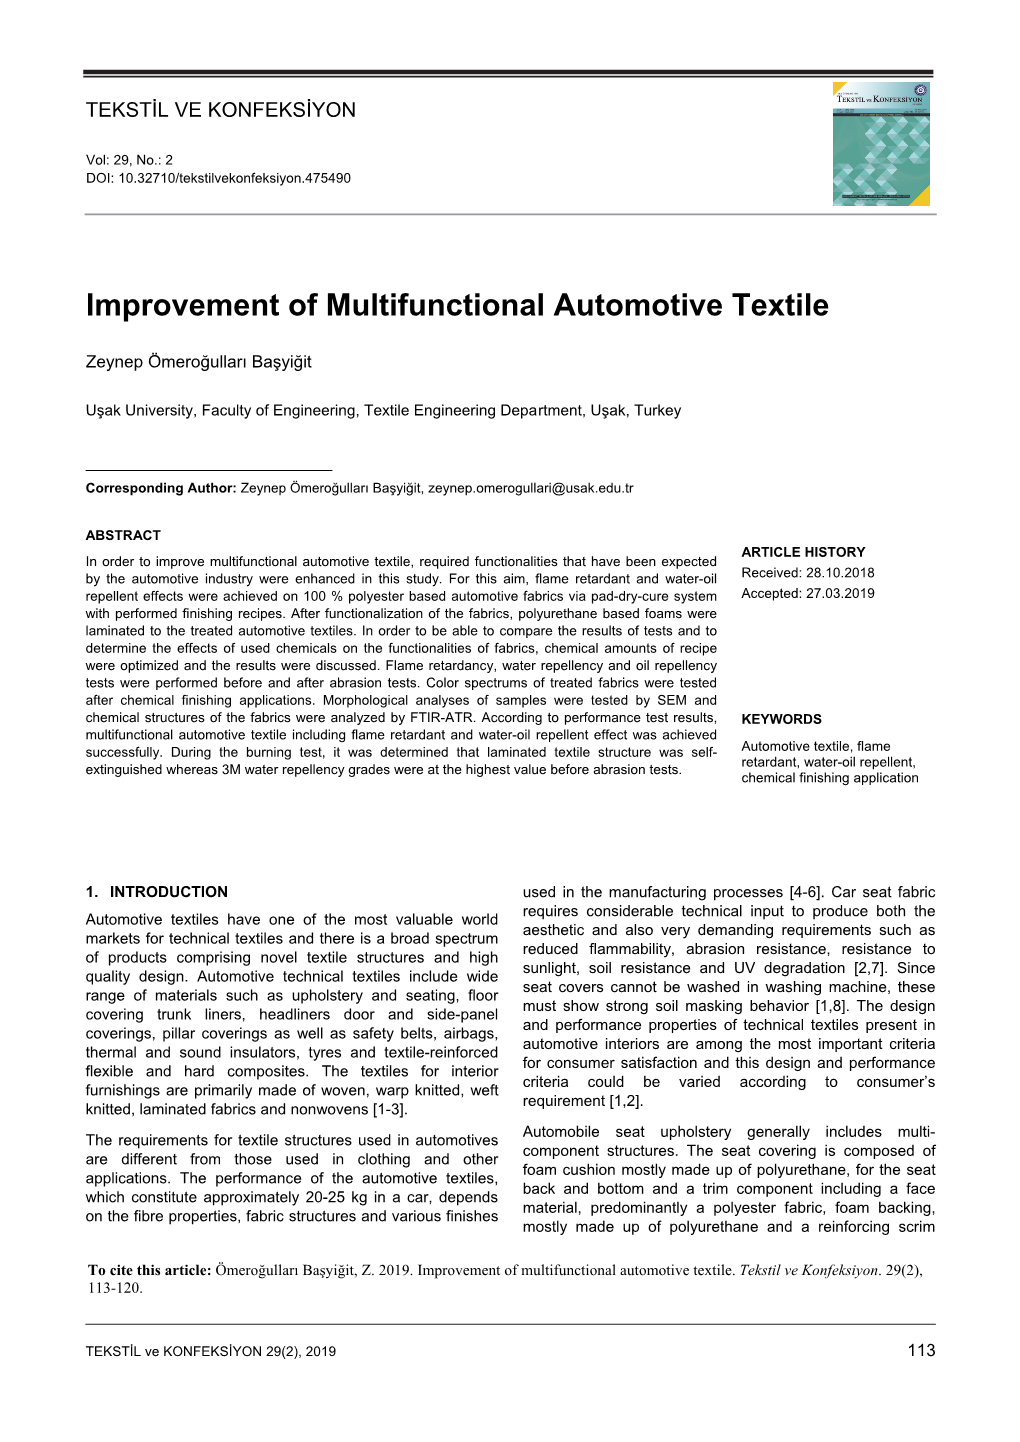 Improvement of Multifunctional Automotive Textile